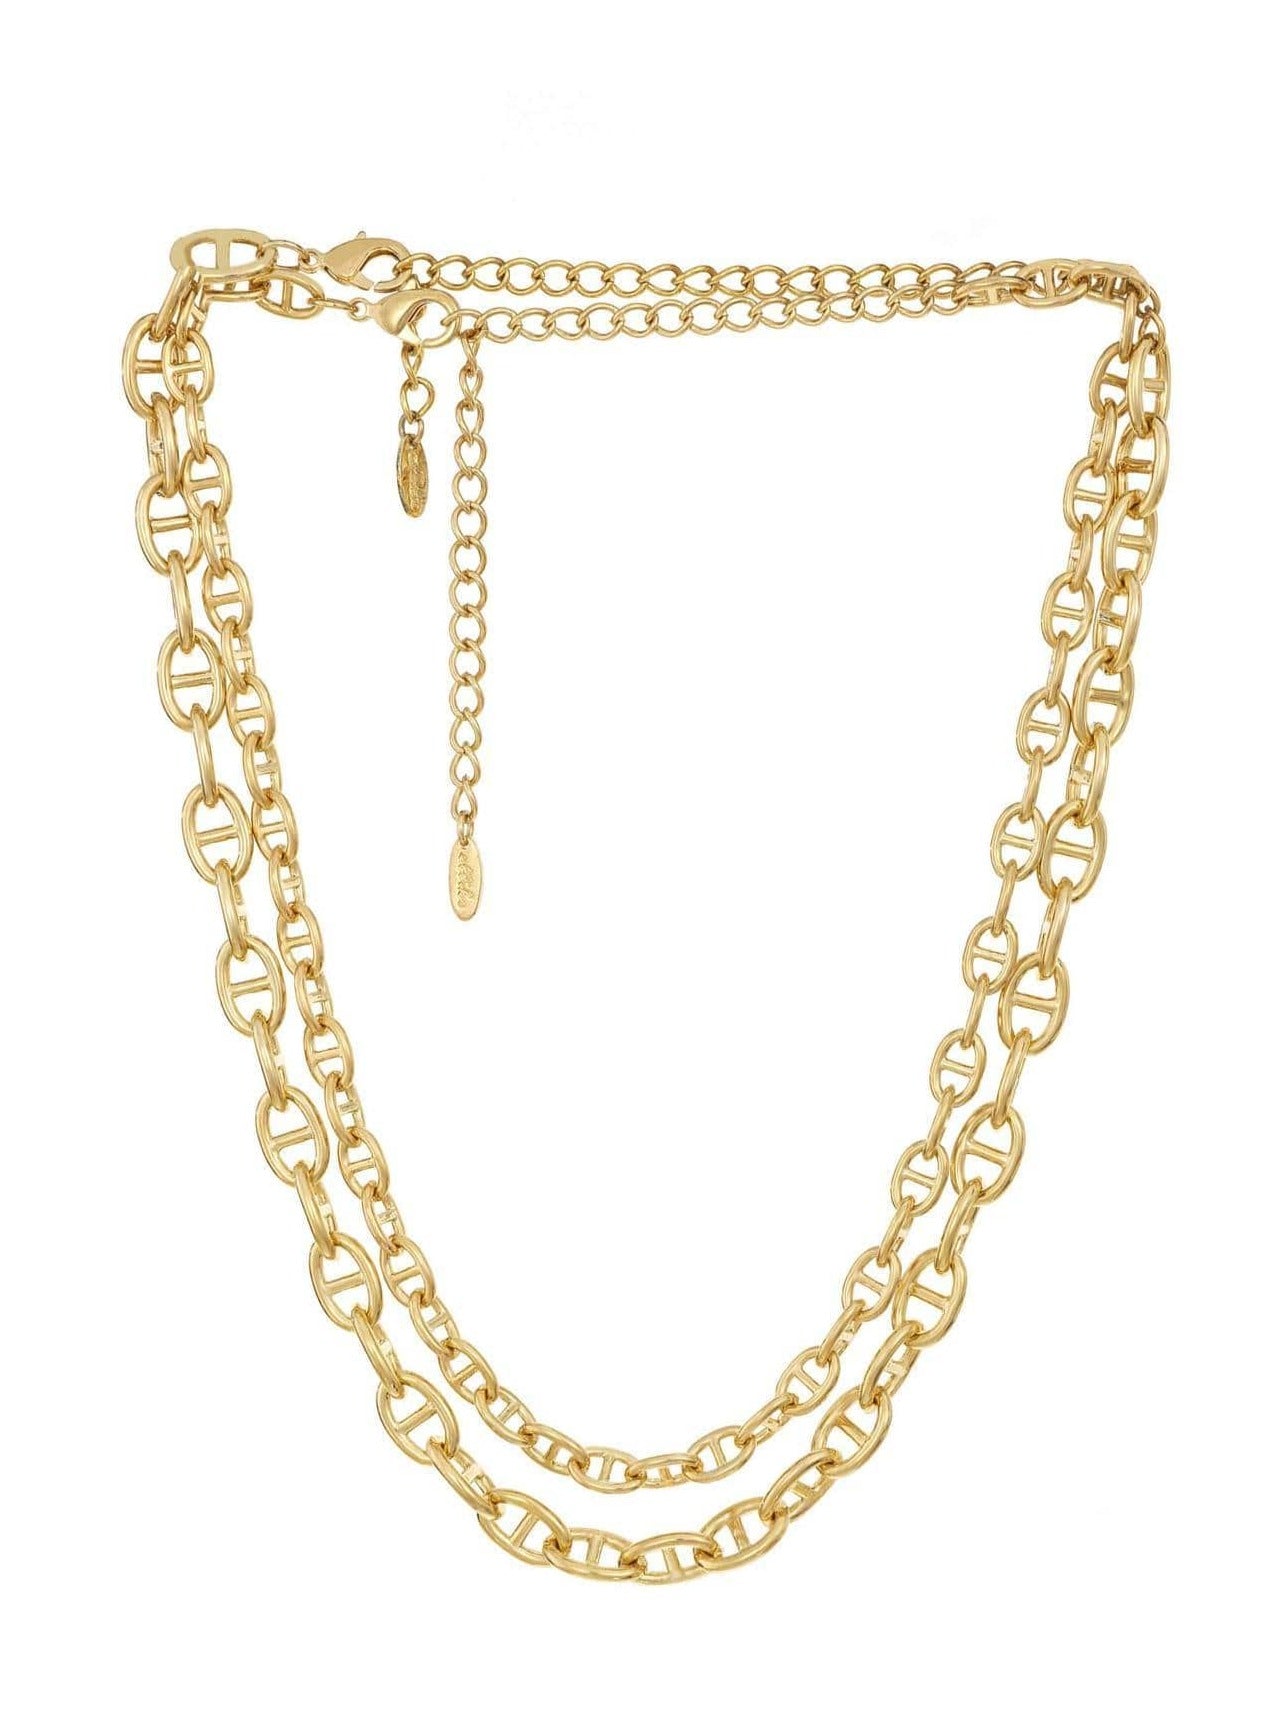 ettika necklace 18k GOLD CHAIN LINK // NECKLACE